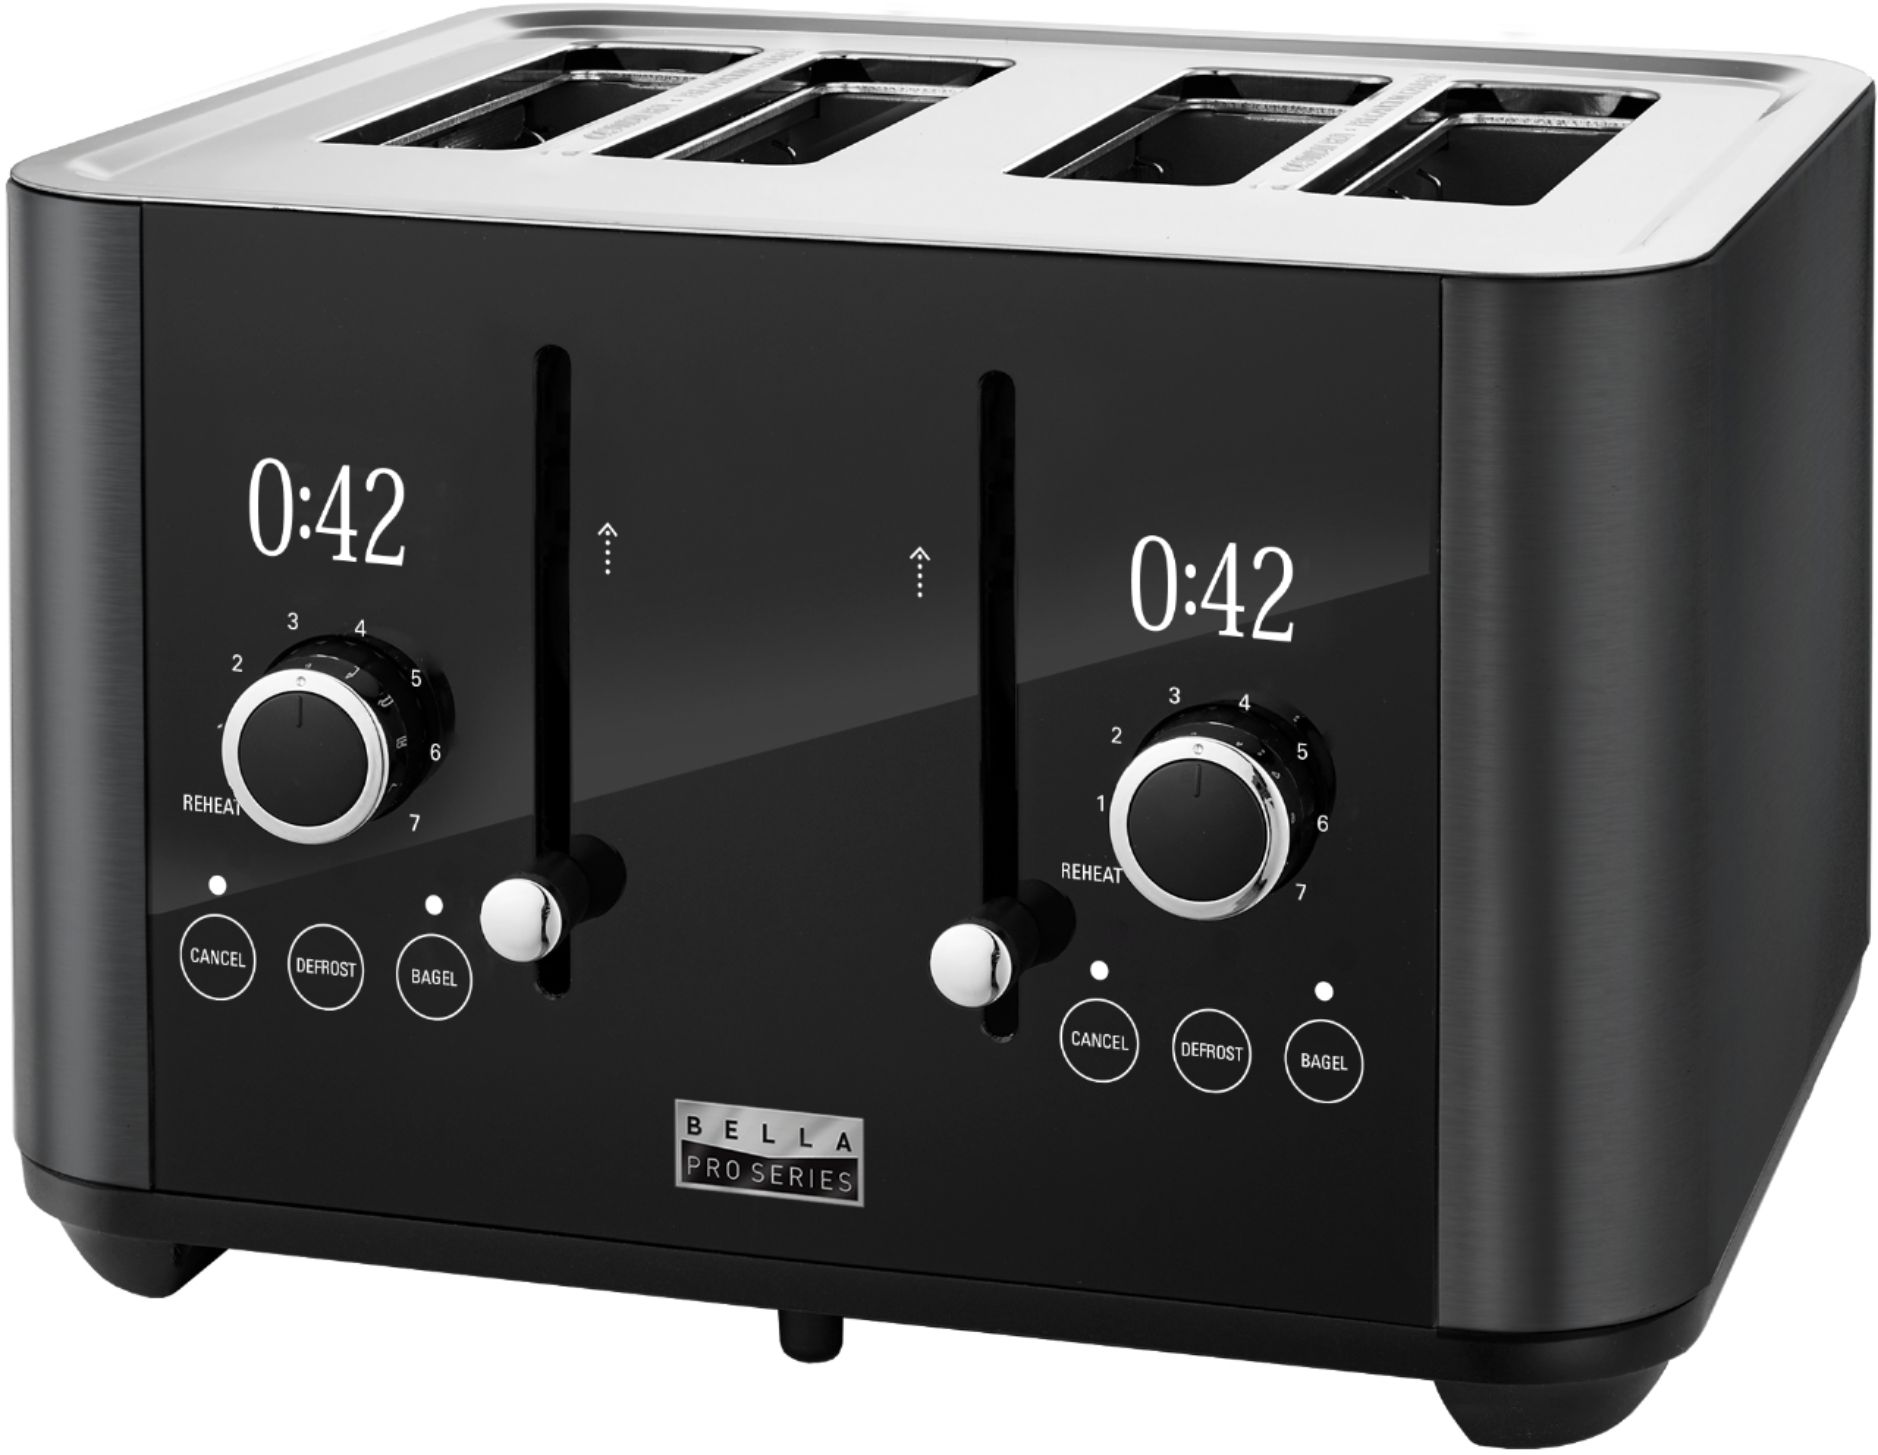 bella-pro-series-4-slice-digital-touchscreen-toaster-black